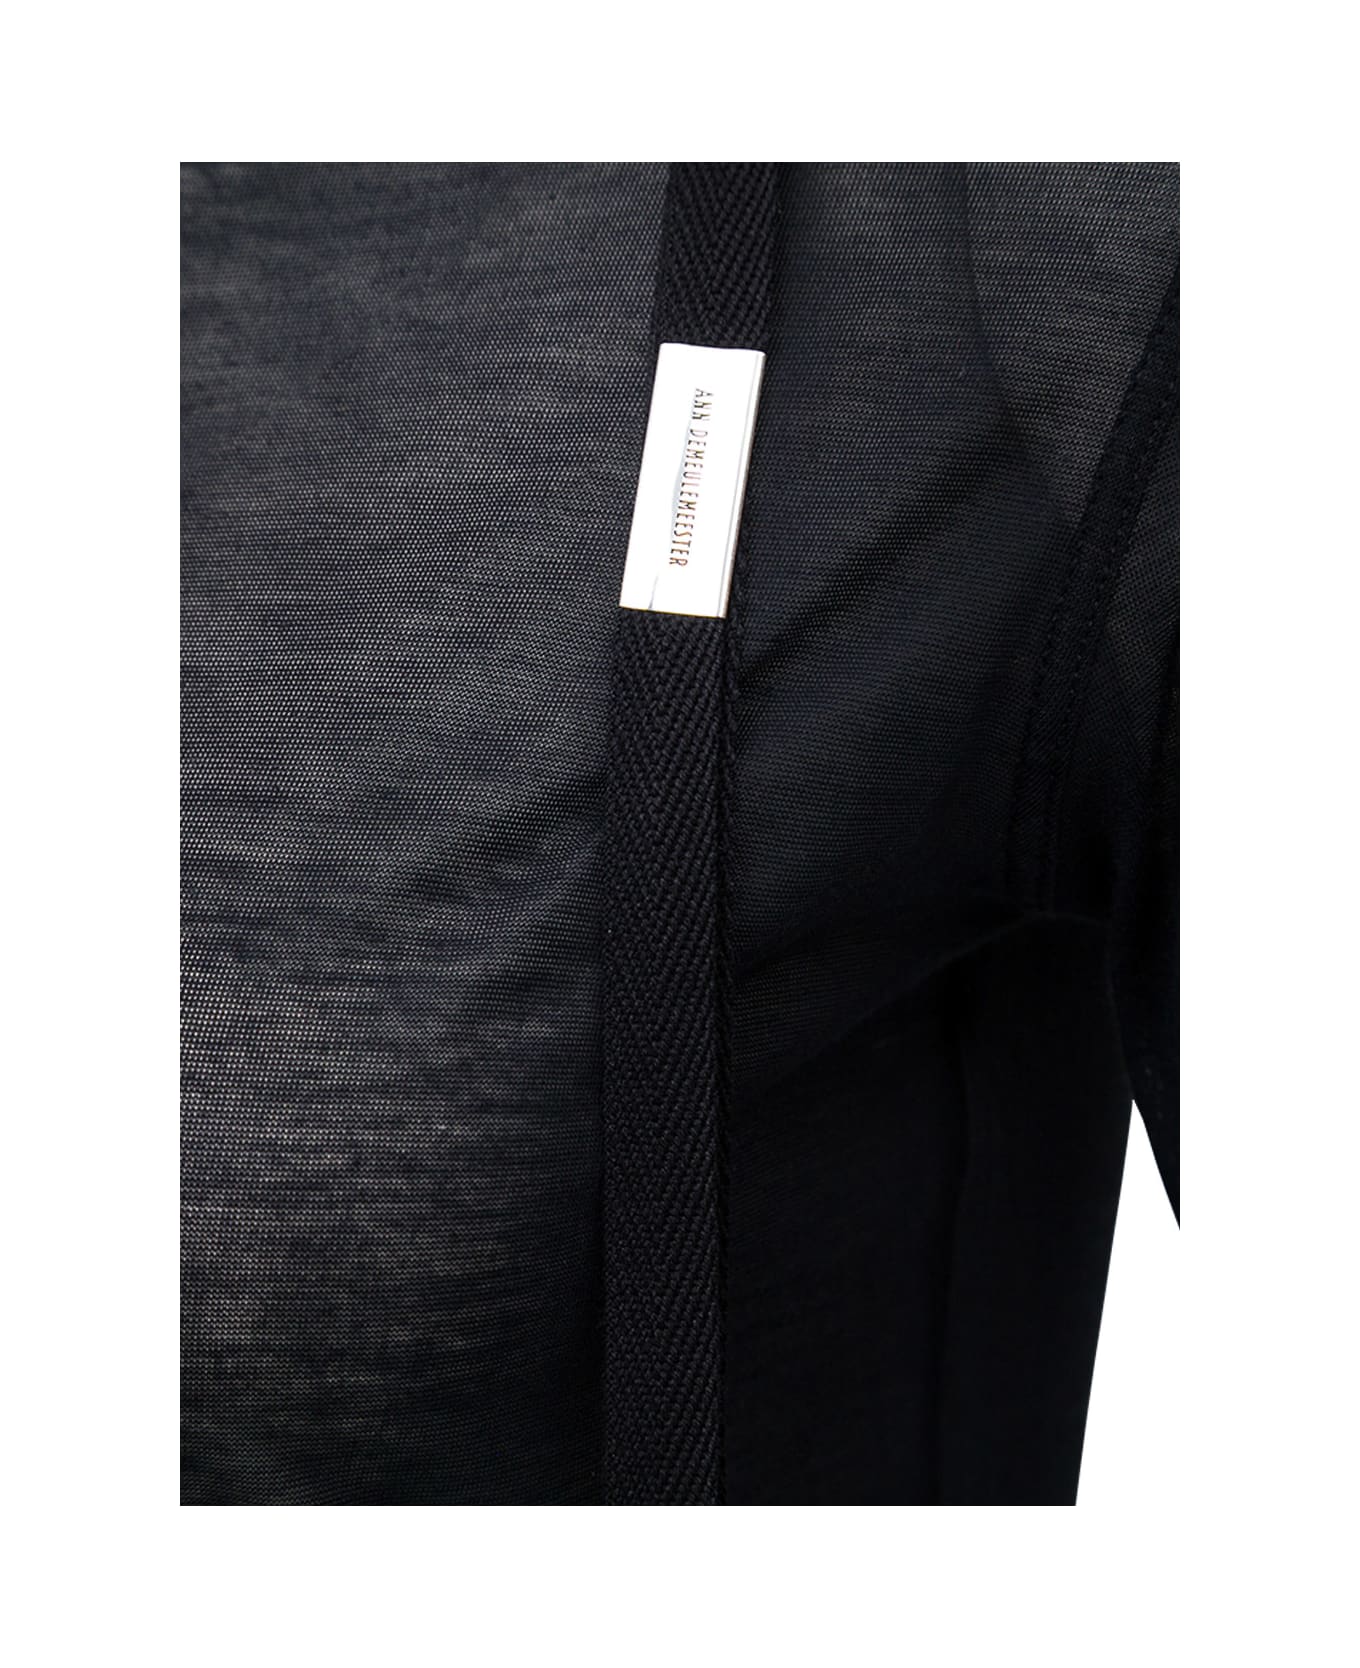 Ann Demeulemeester Camille Black Light Jersey Long Sleeve Tee Wit Ribbon Detail - Black